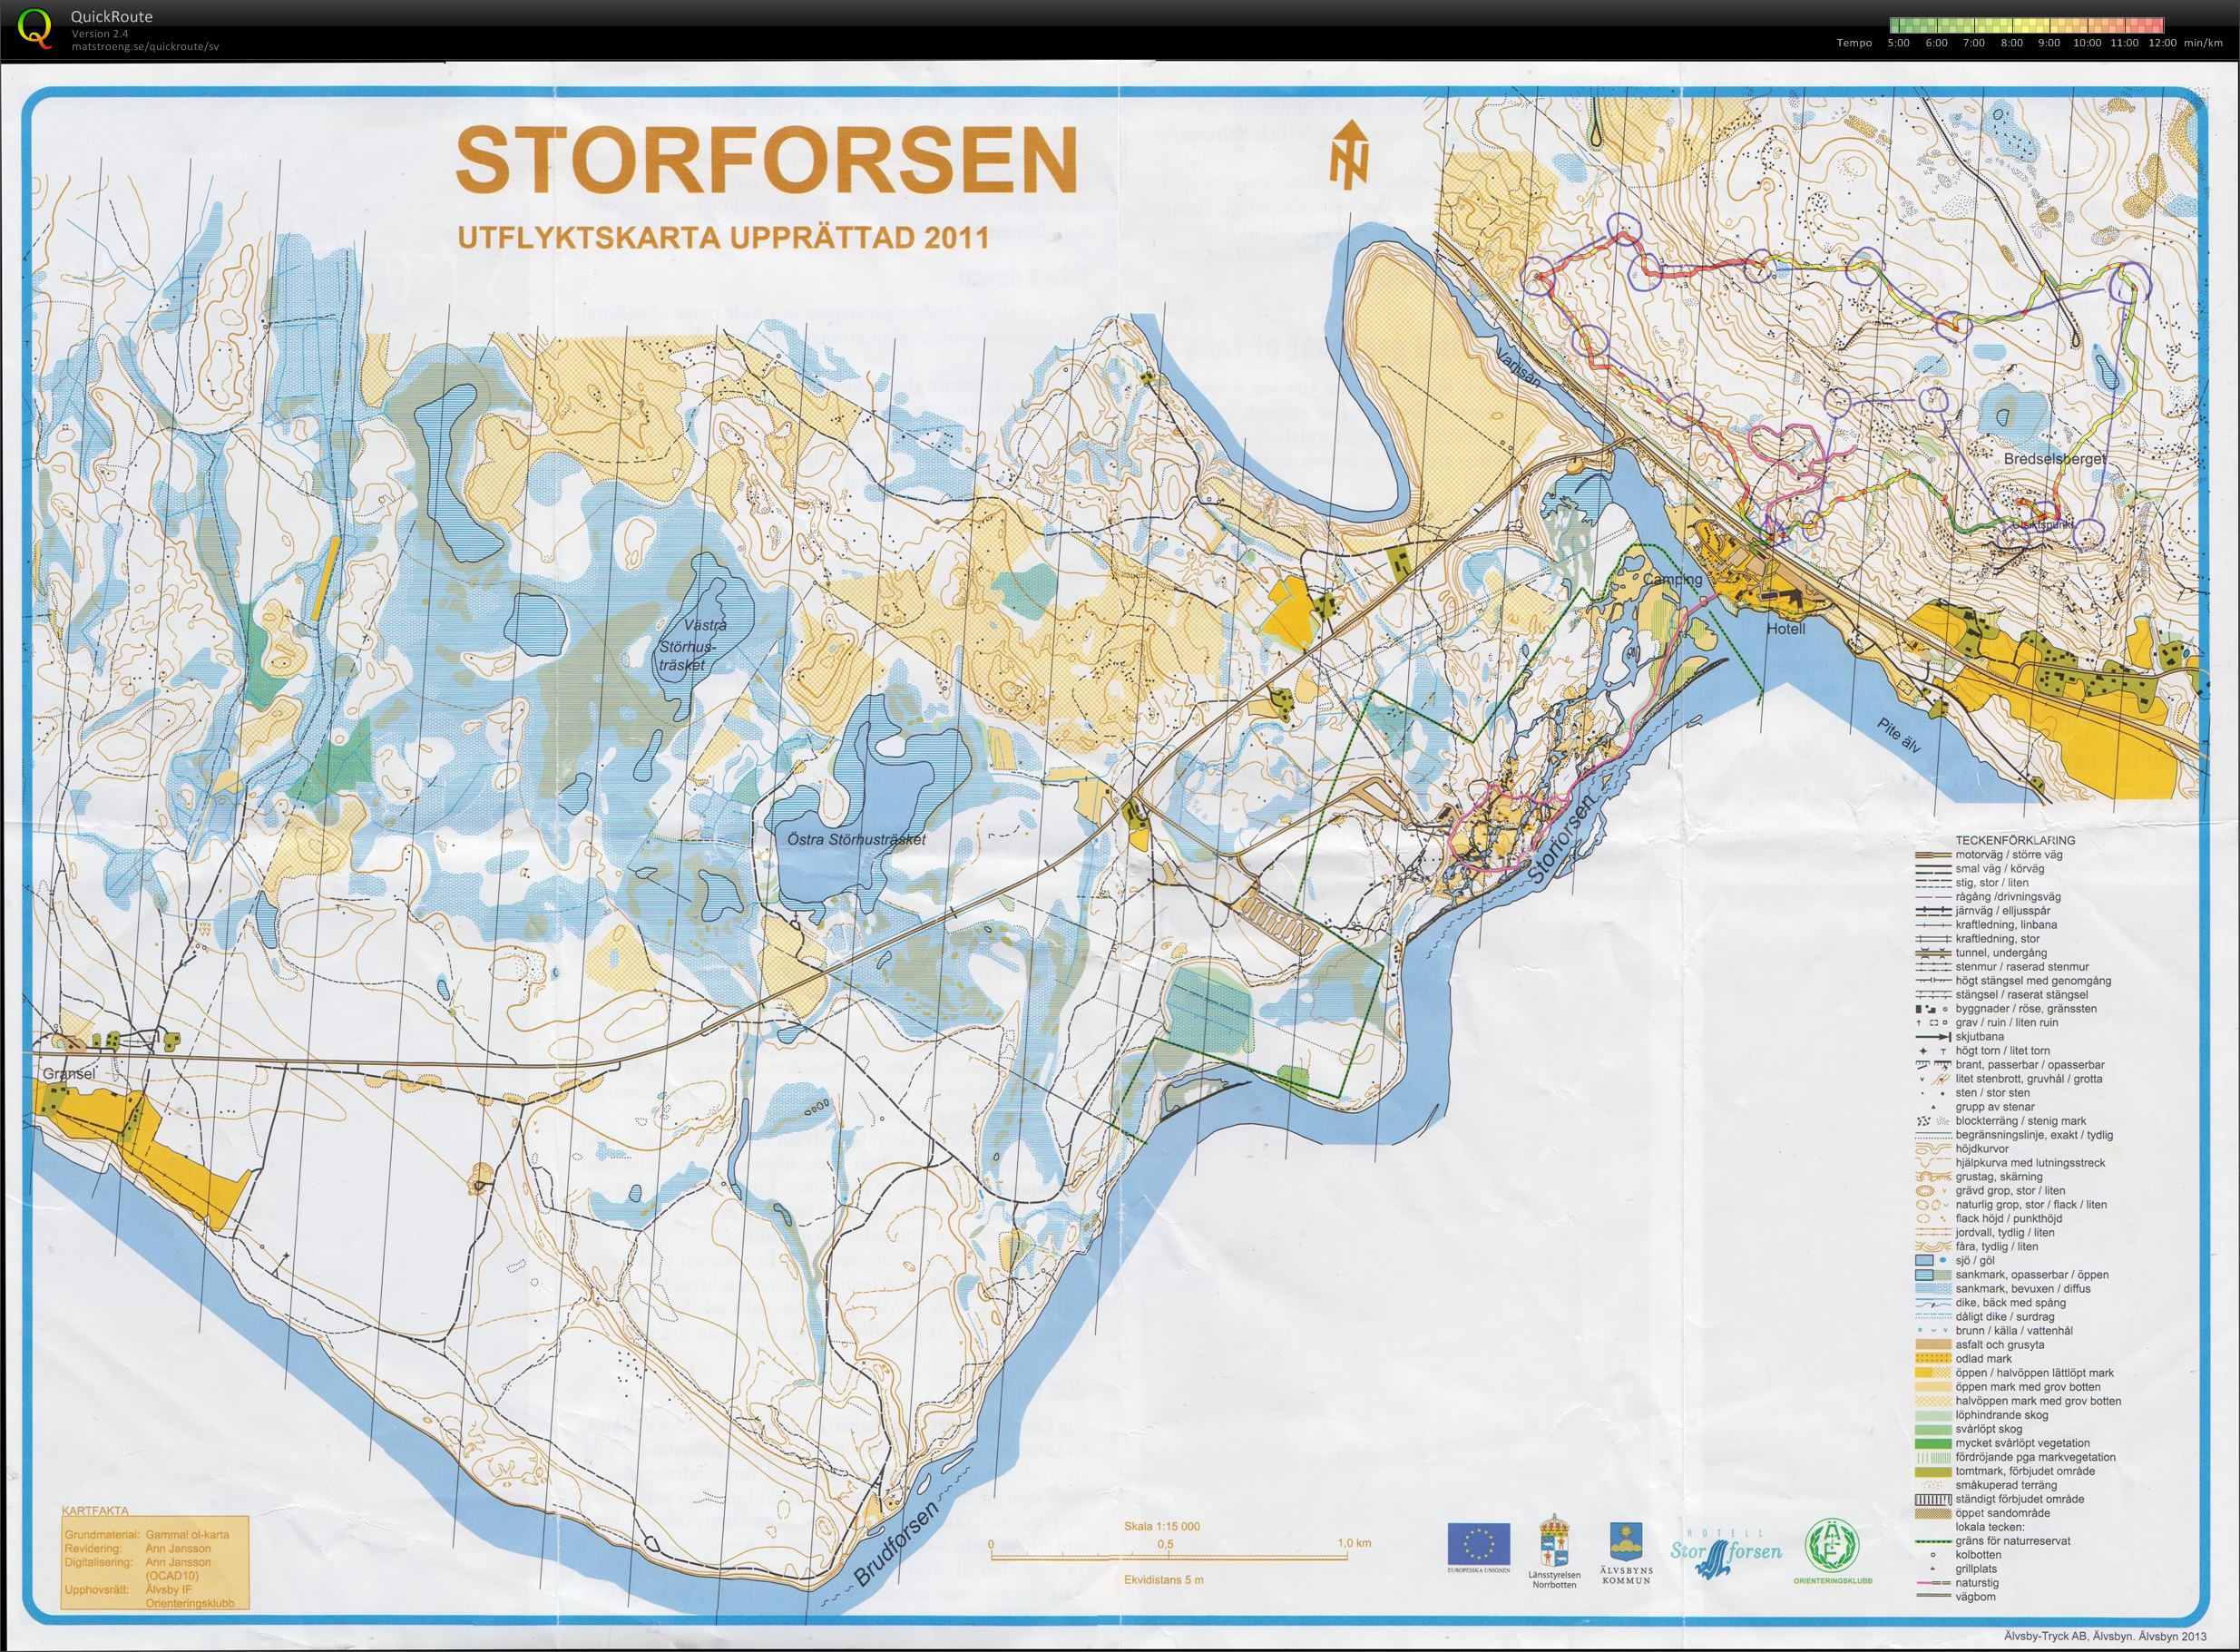 Storforsen (06/07/2015)